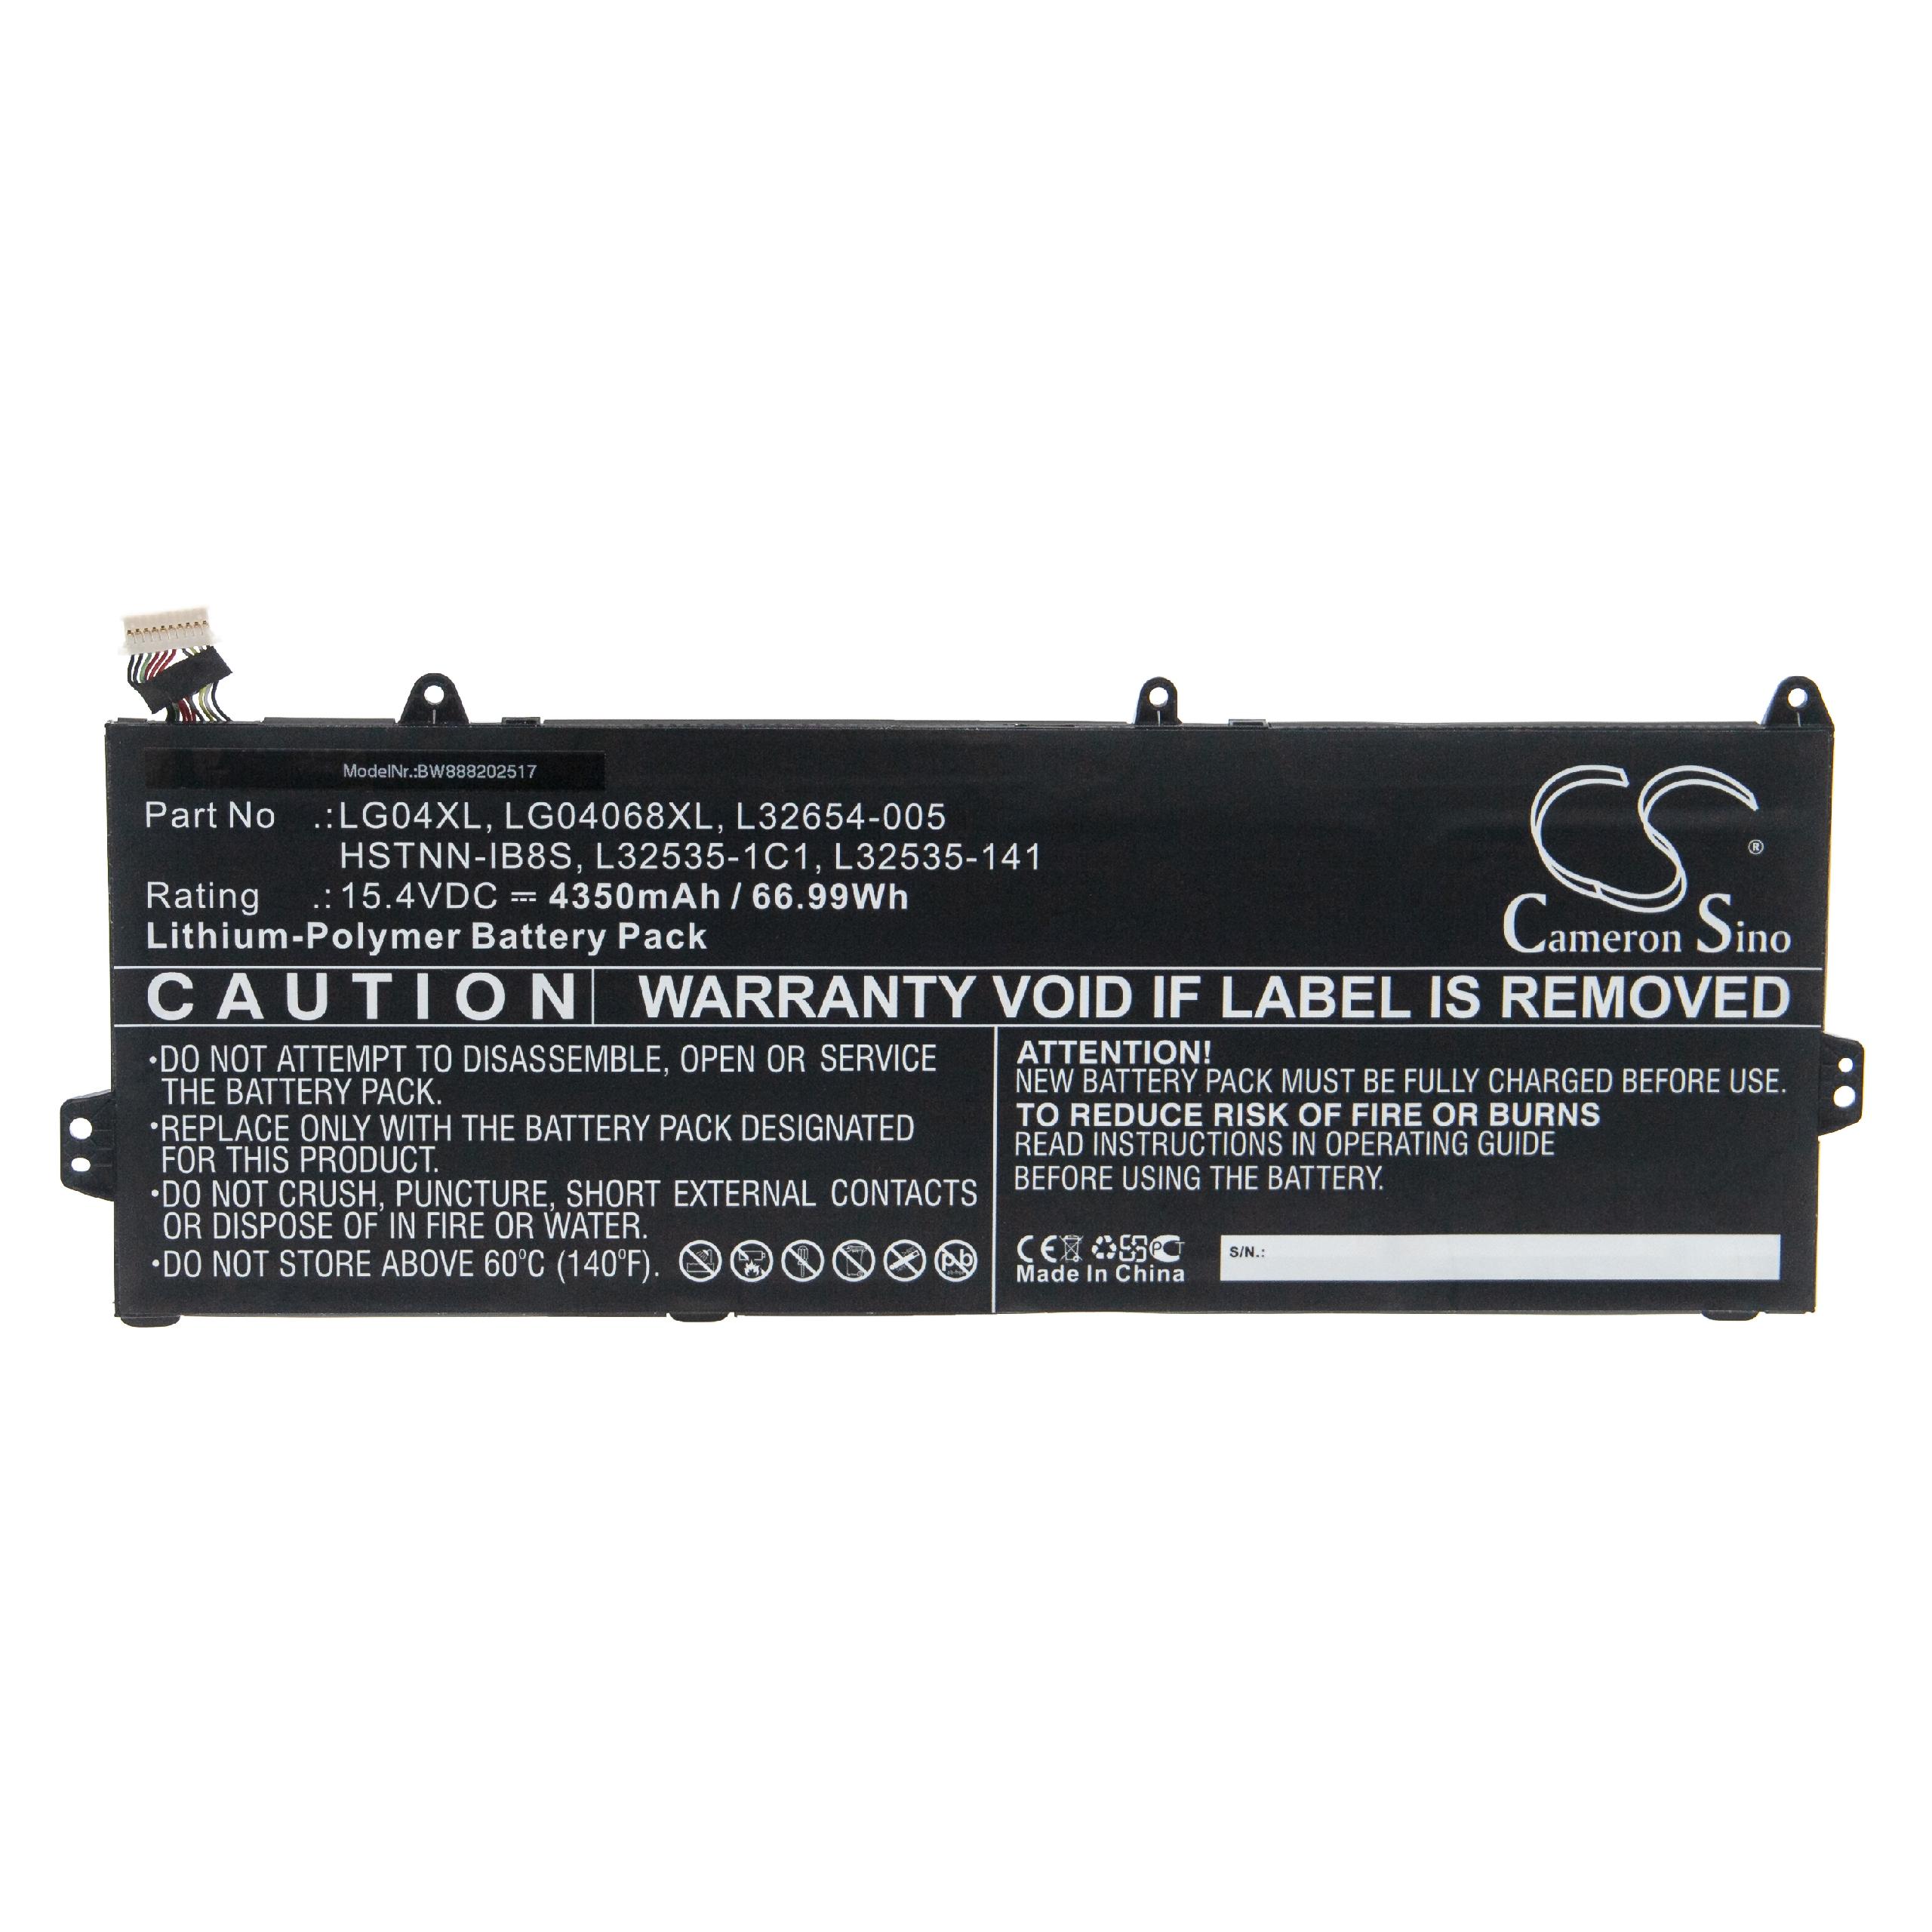 Notebook Battery Replacement for HP HSTNN-IB8S, L32535-141, L32535-1C1, L32654-005 - 4350mAh 15.4V Li-polymer